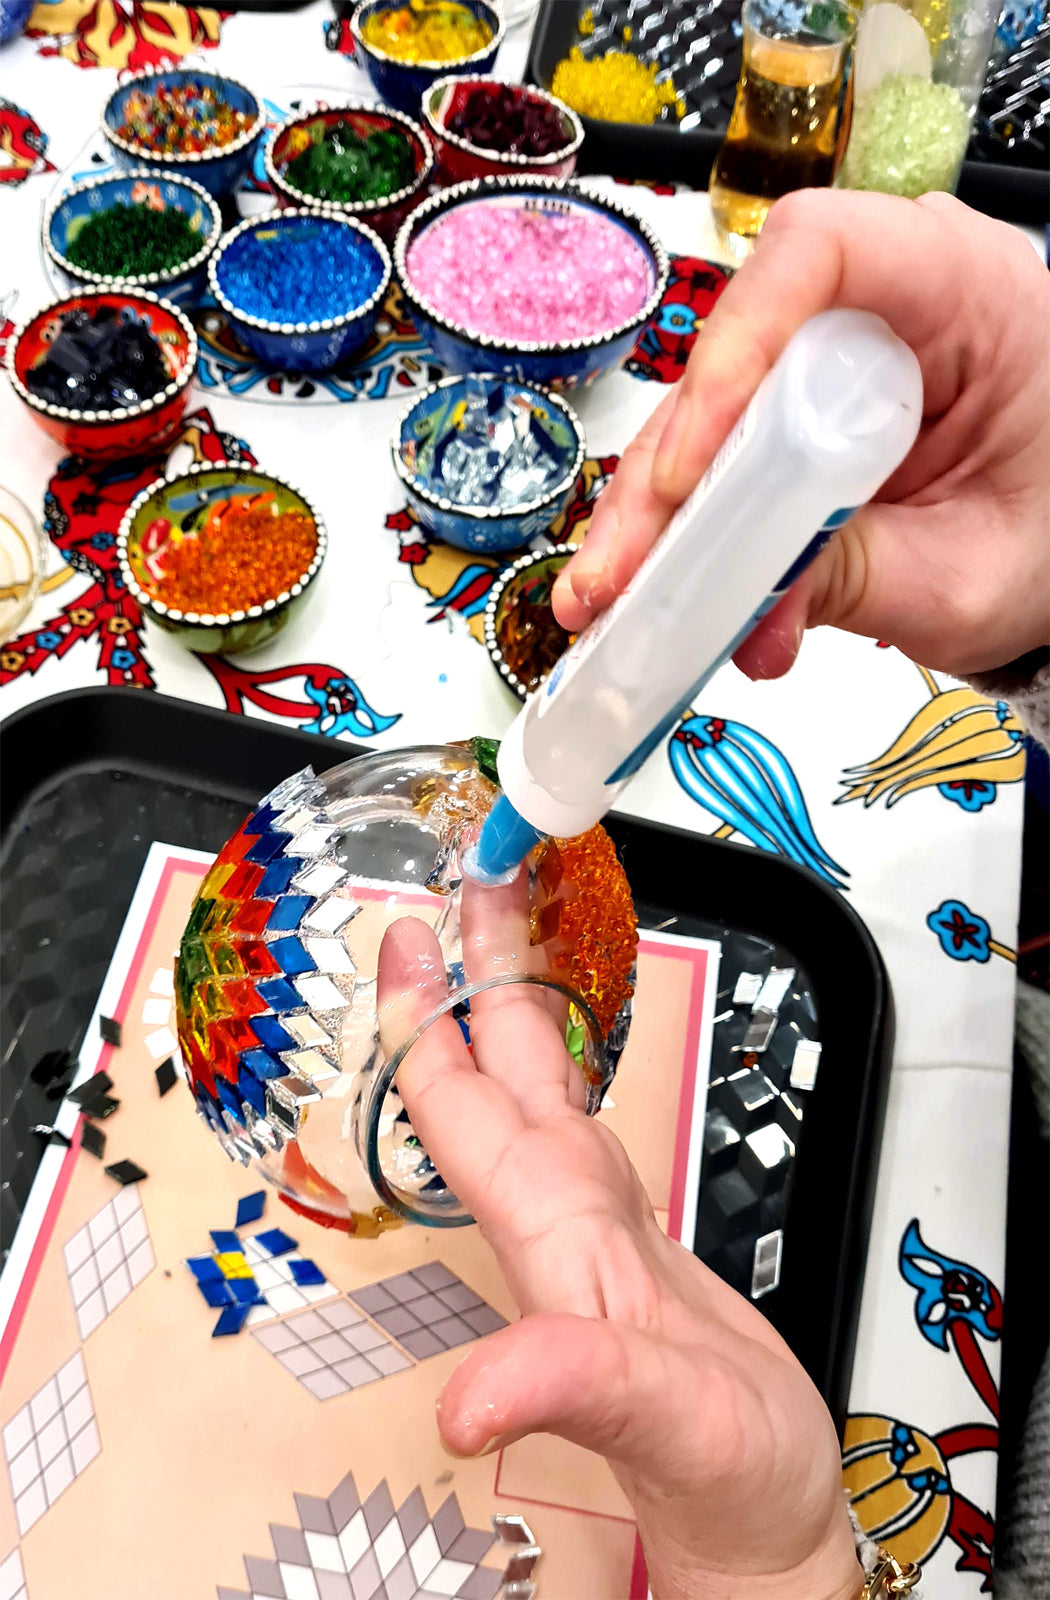 DIY Mosaic Tealight Craft Kit - Holi